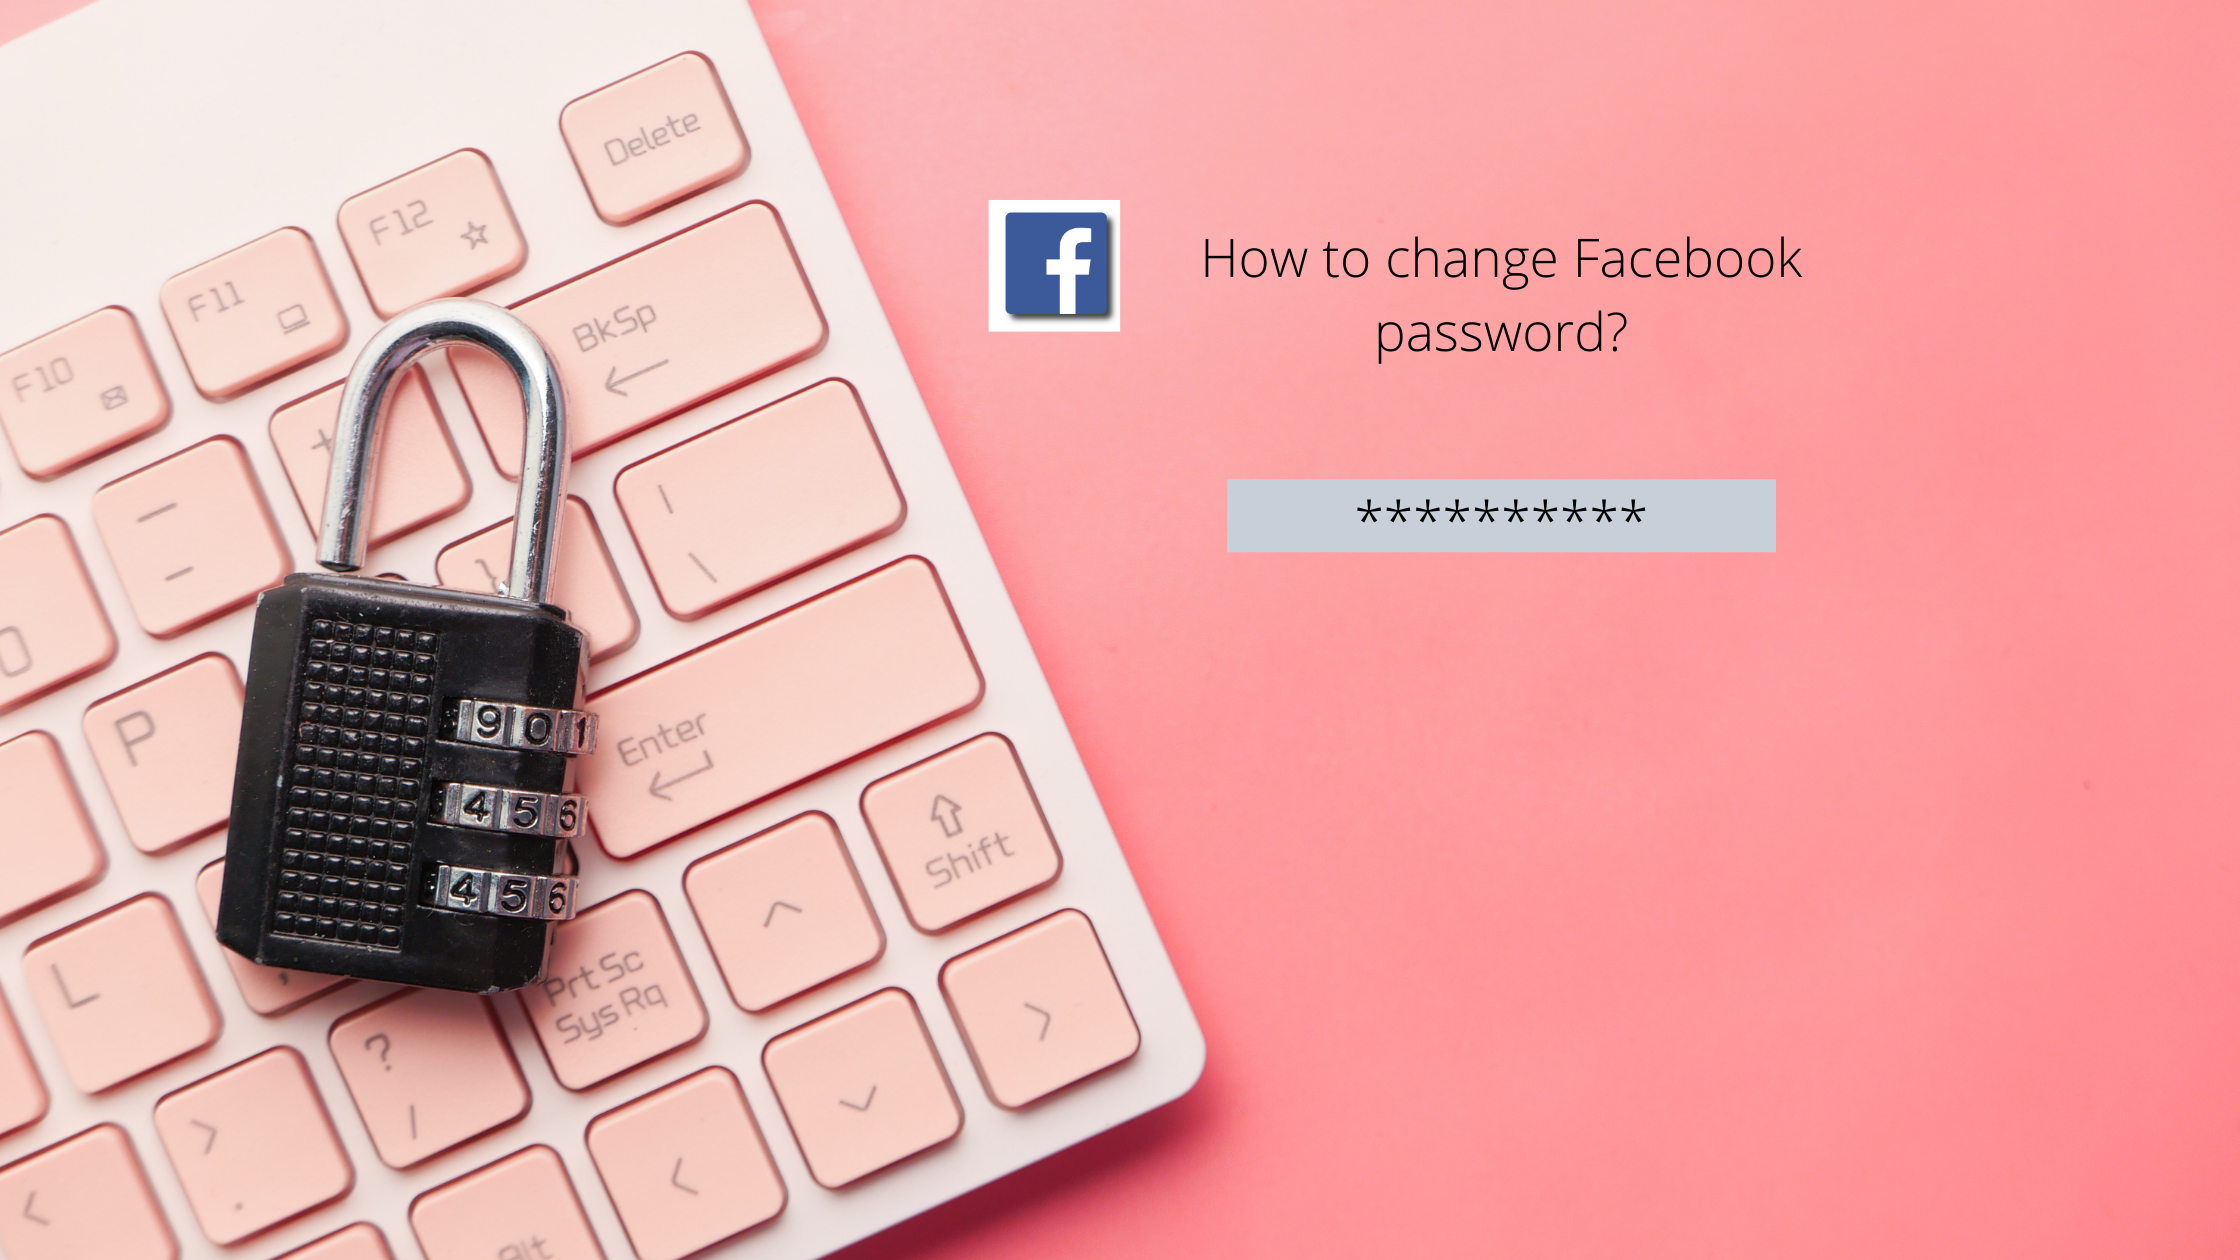 ho to change Facebook password